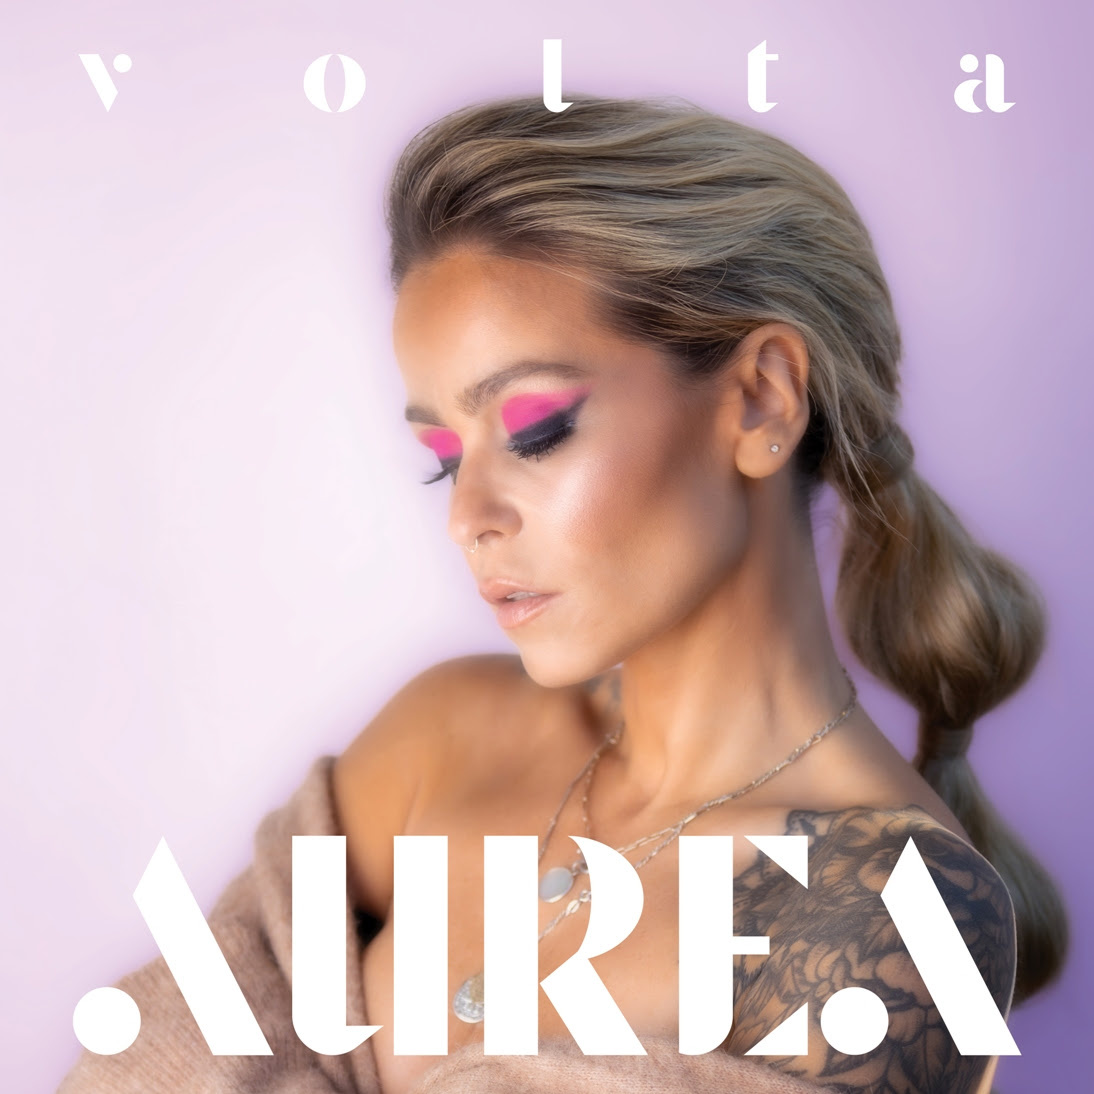 Aurea lança novo single e vídeo “Volta”